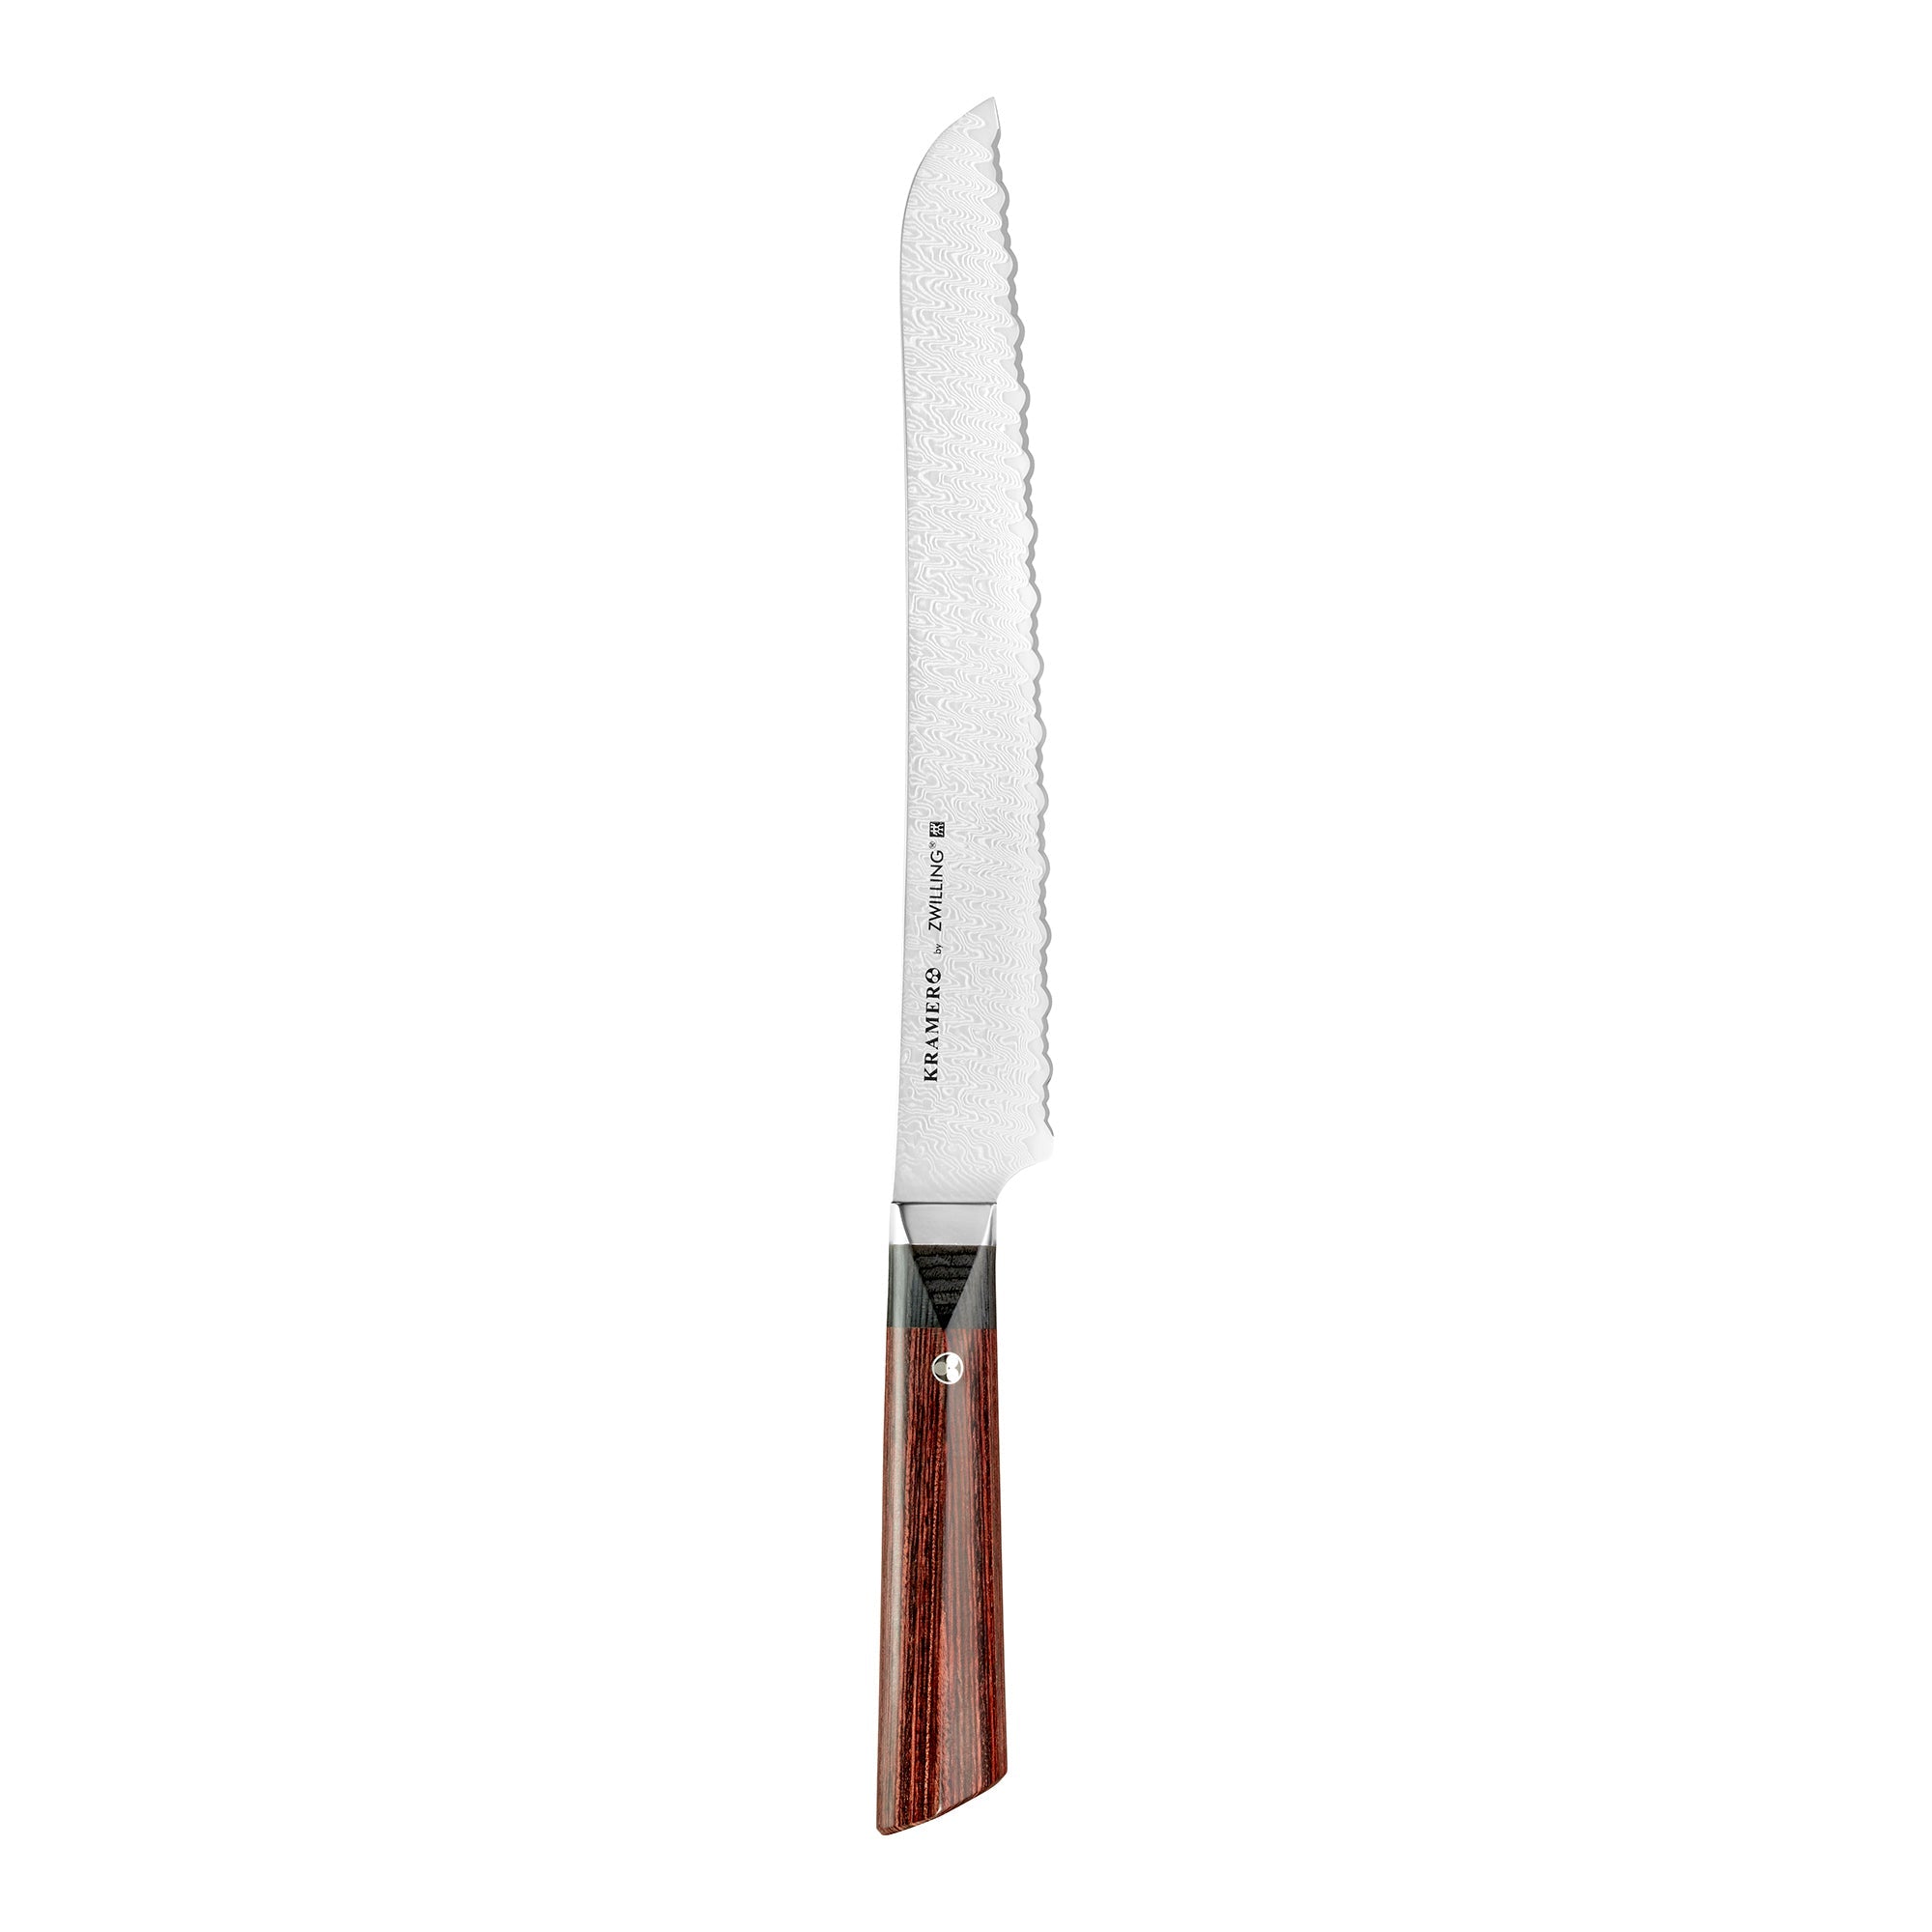 ZWILLING Kramer - EUROLINE Stainless Damascus Collection 10-inch, Bread  knife